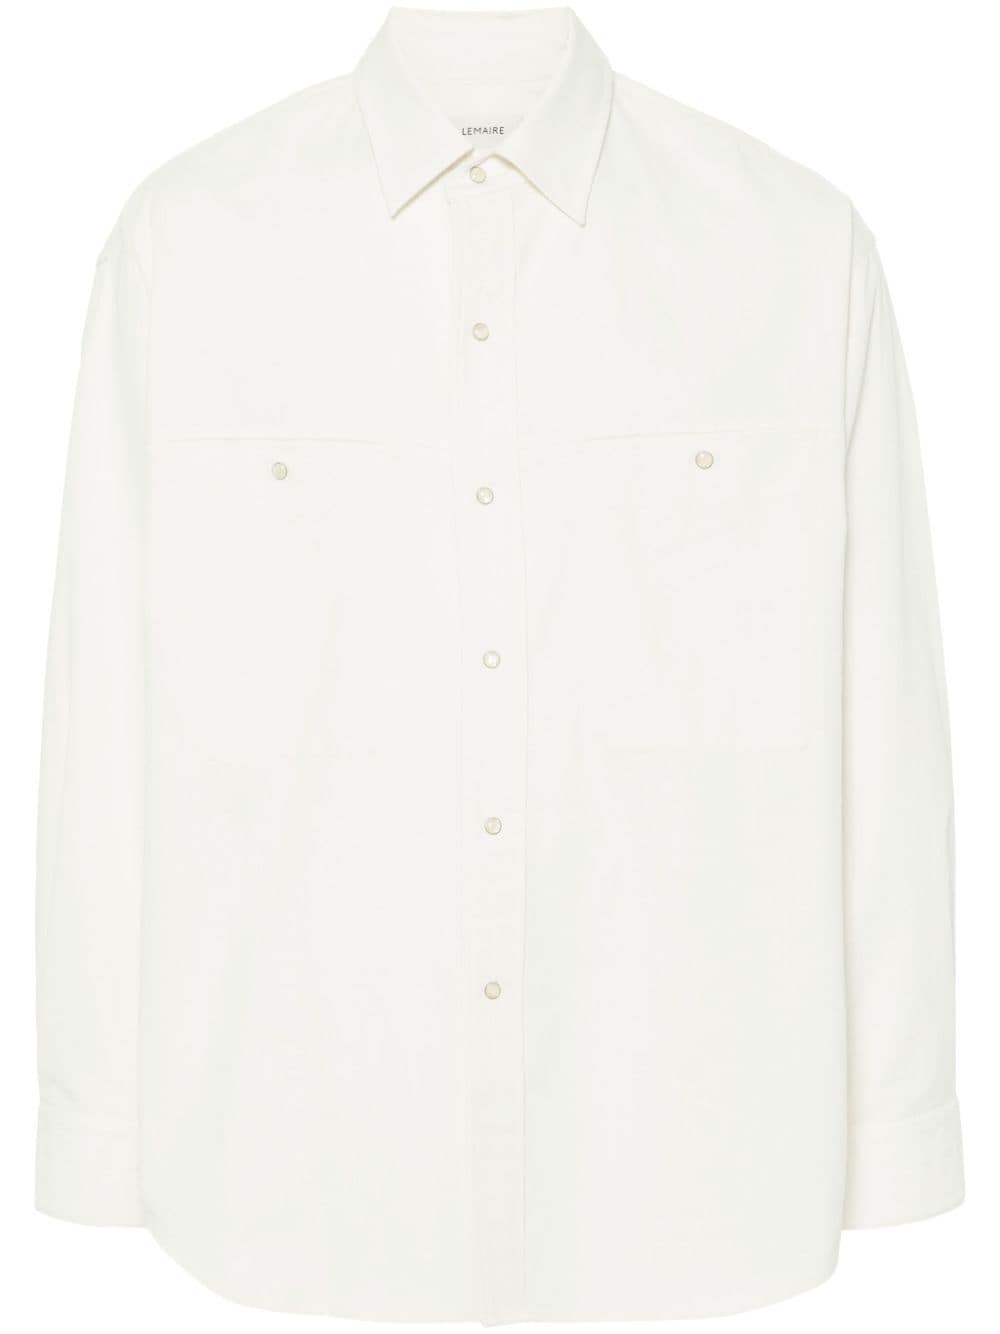 LEMAIRE twill cotton shirt - White von LEMAIRE